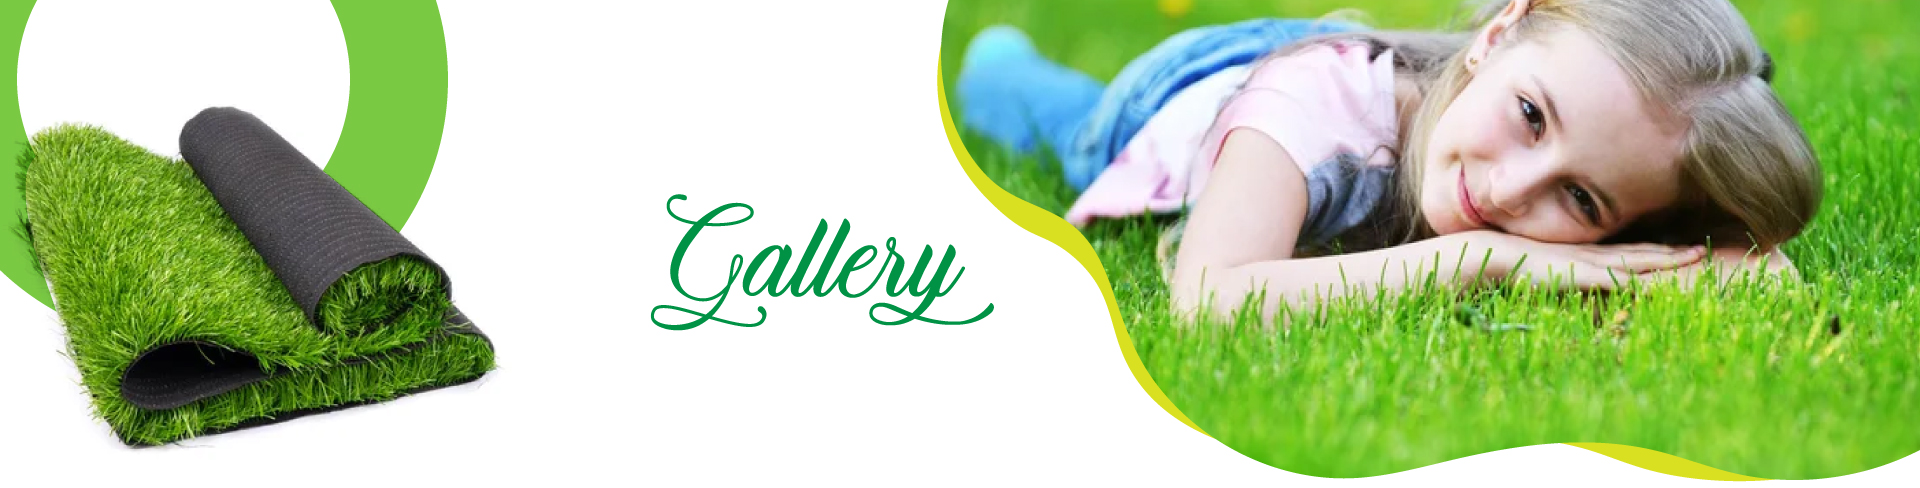 Grass gallery